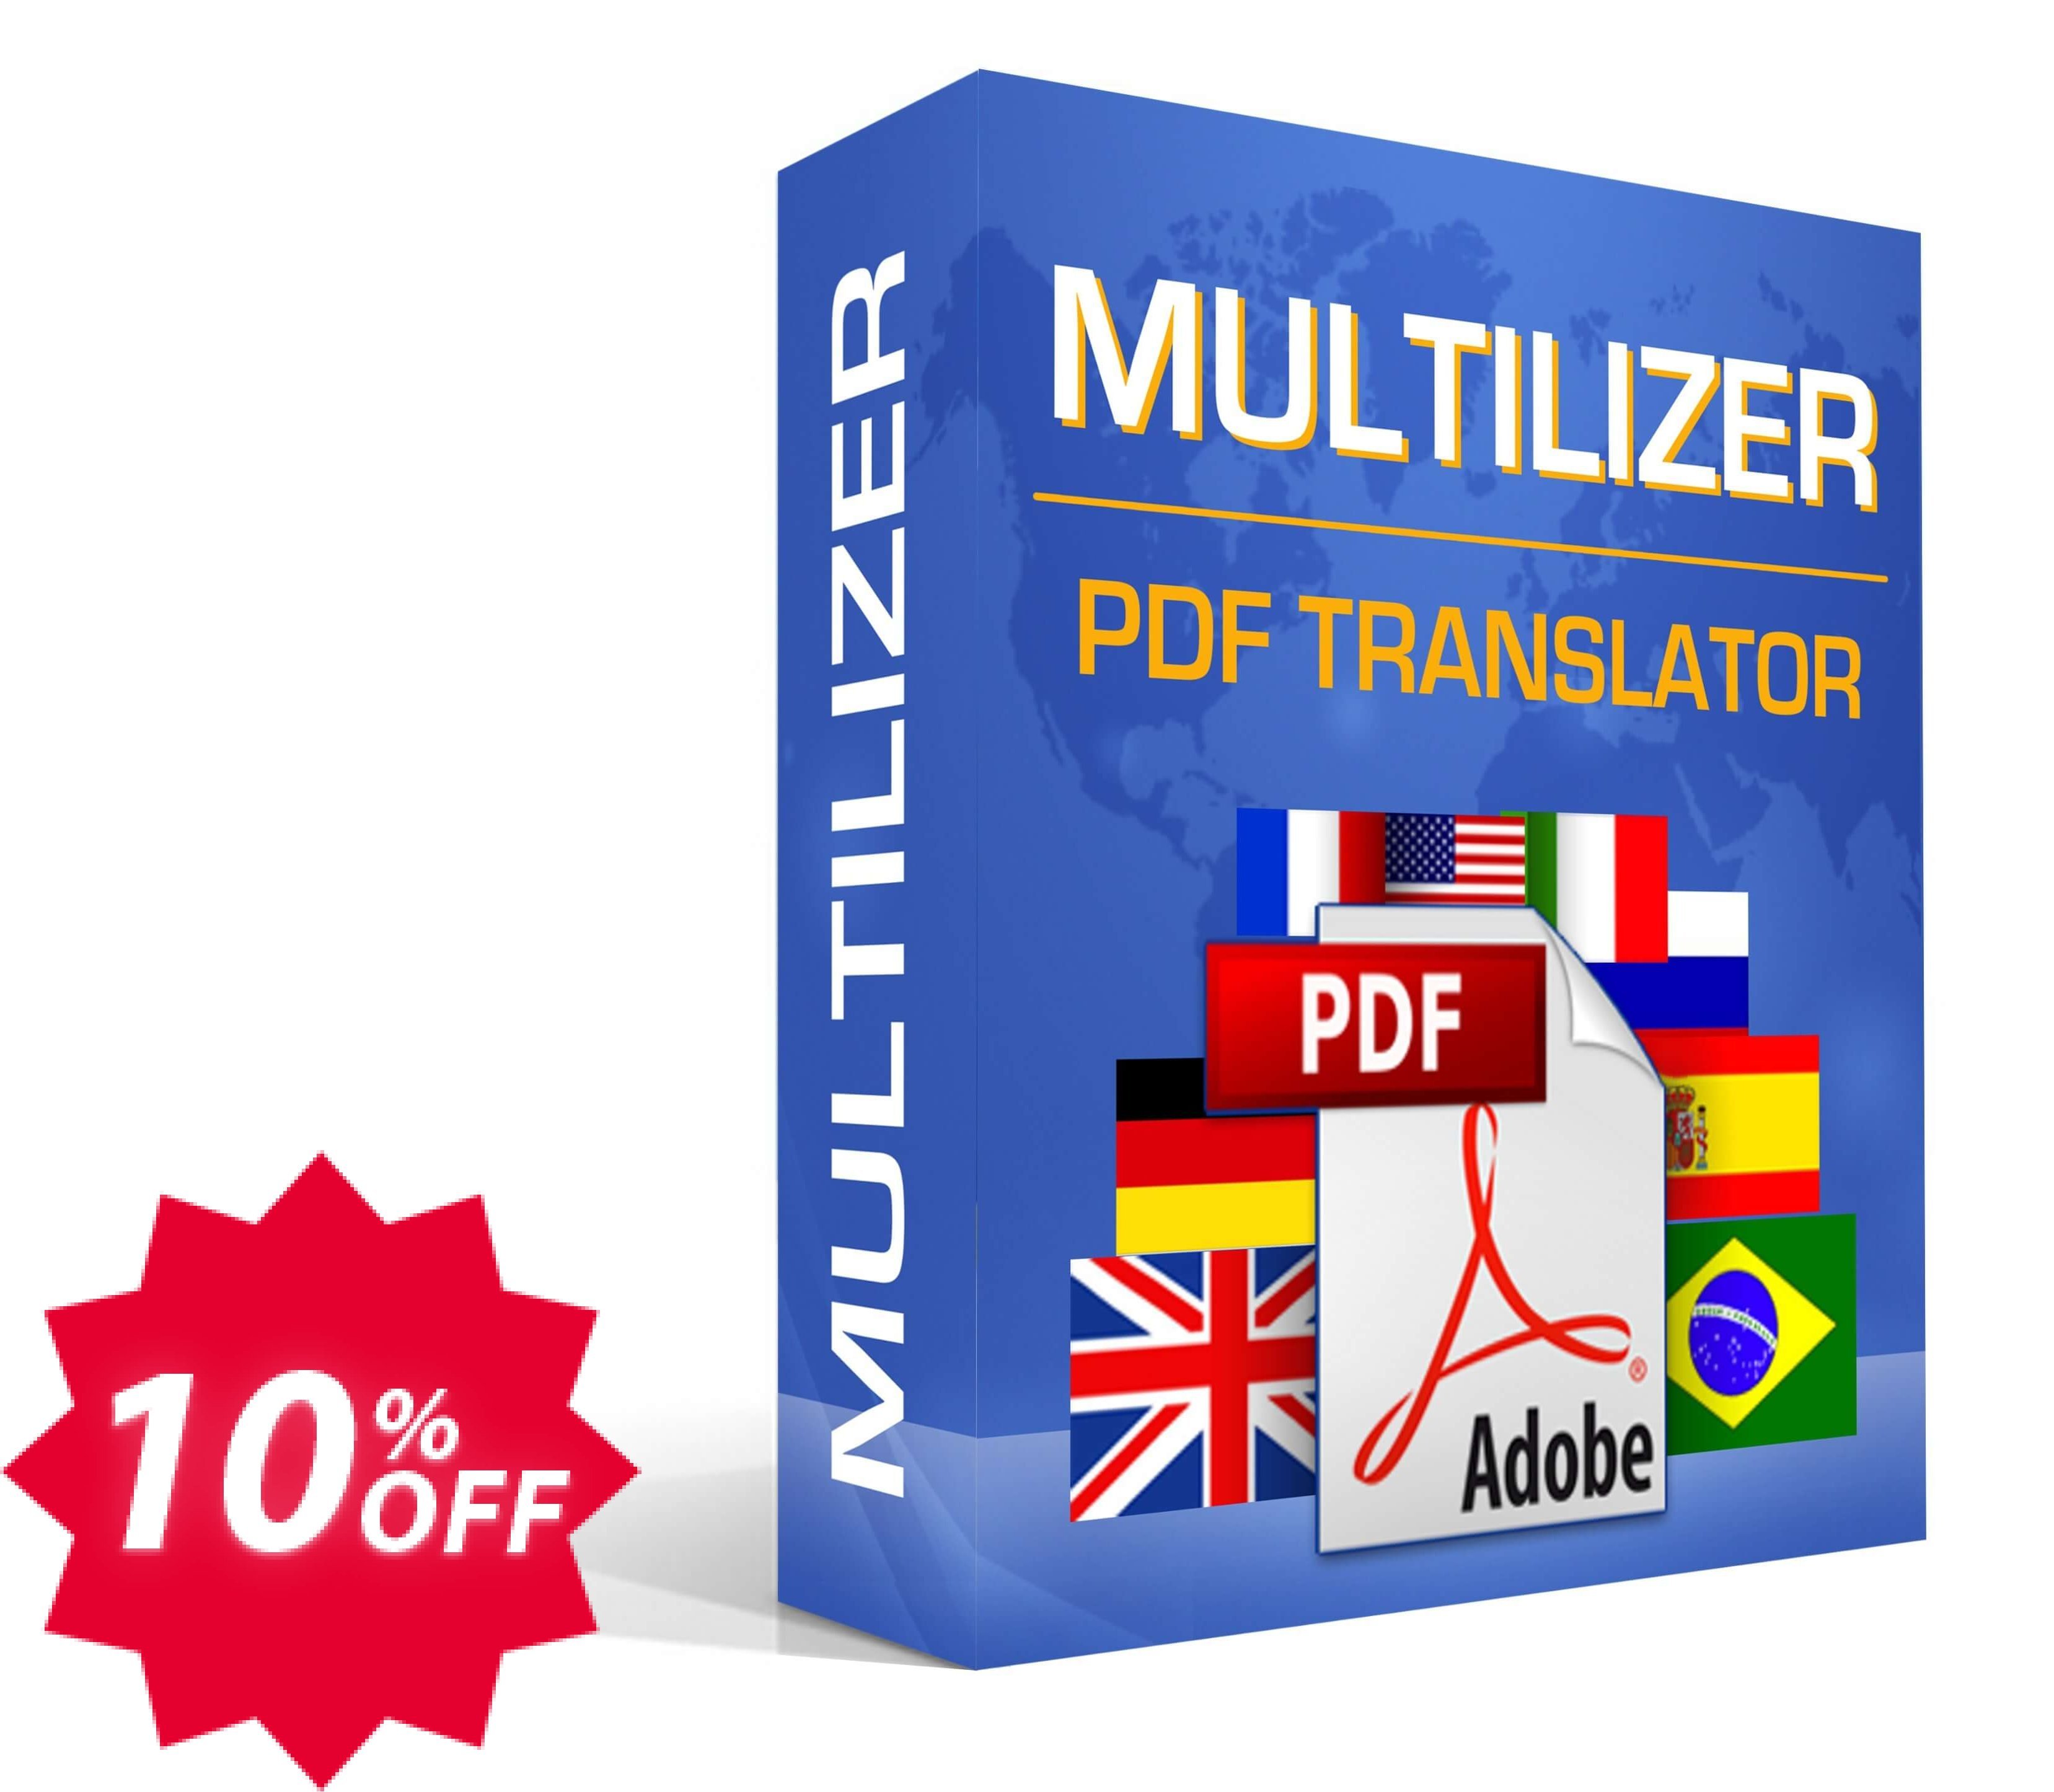 Multilizer PDF Translator Pro Coupon code 10% discount 